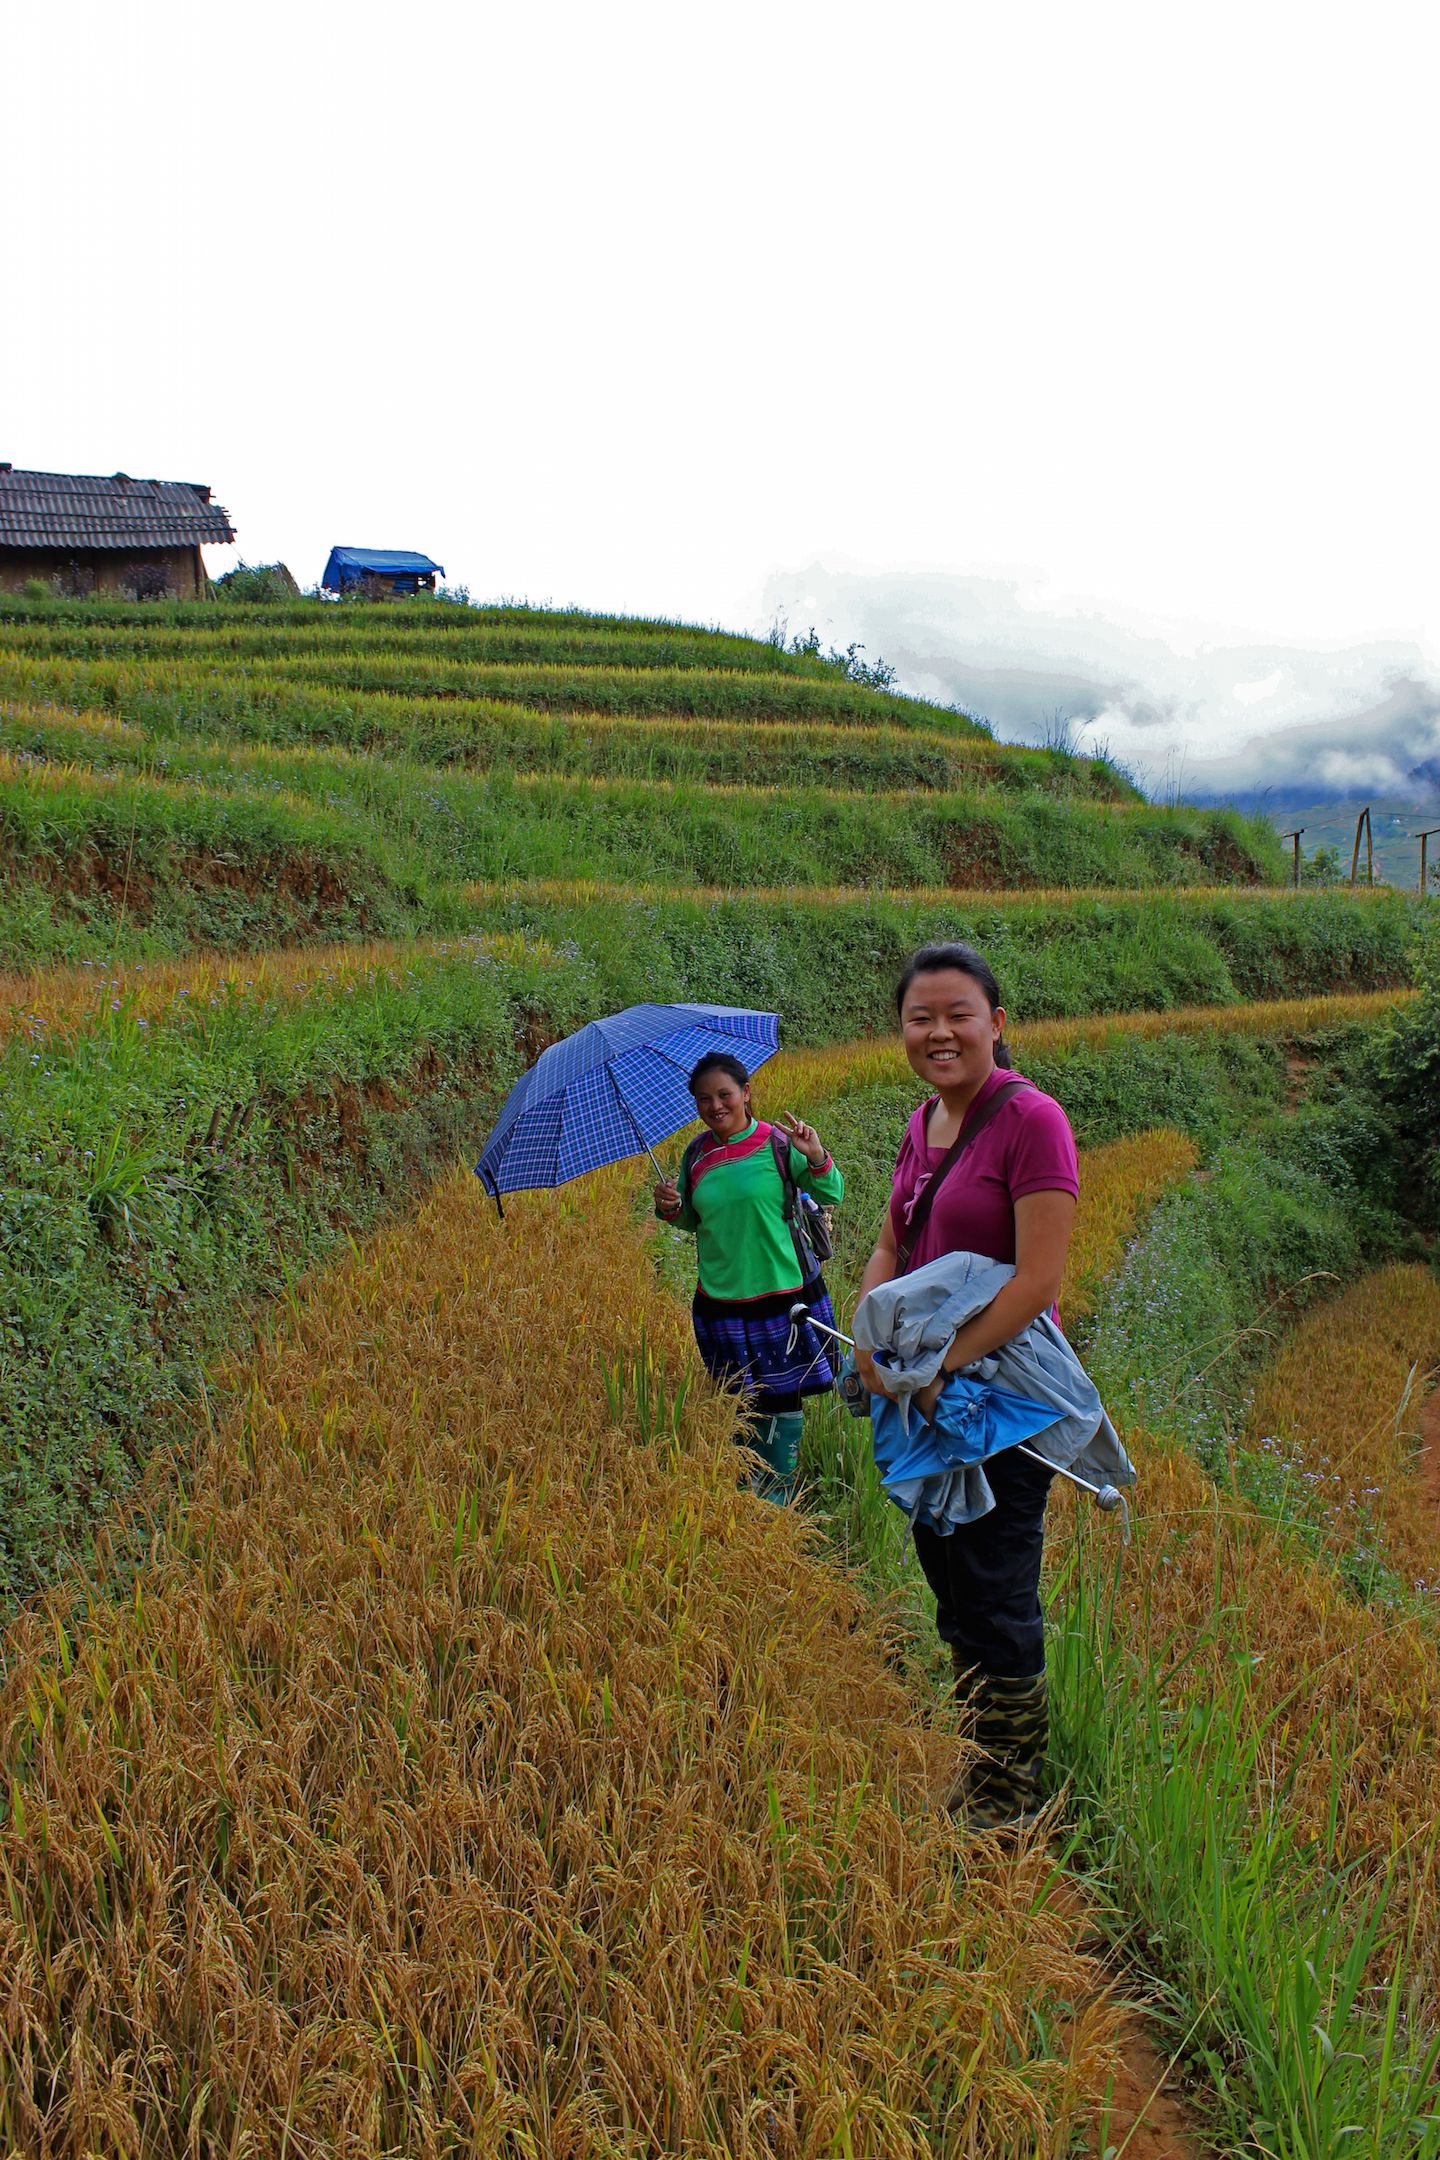 Walking on the edge of rice paddies